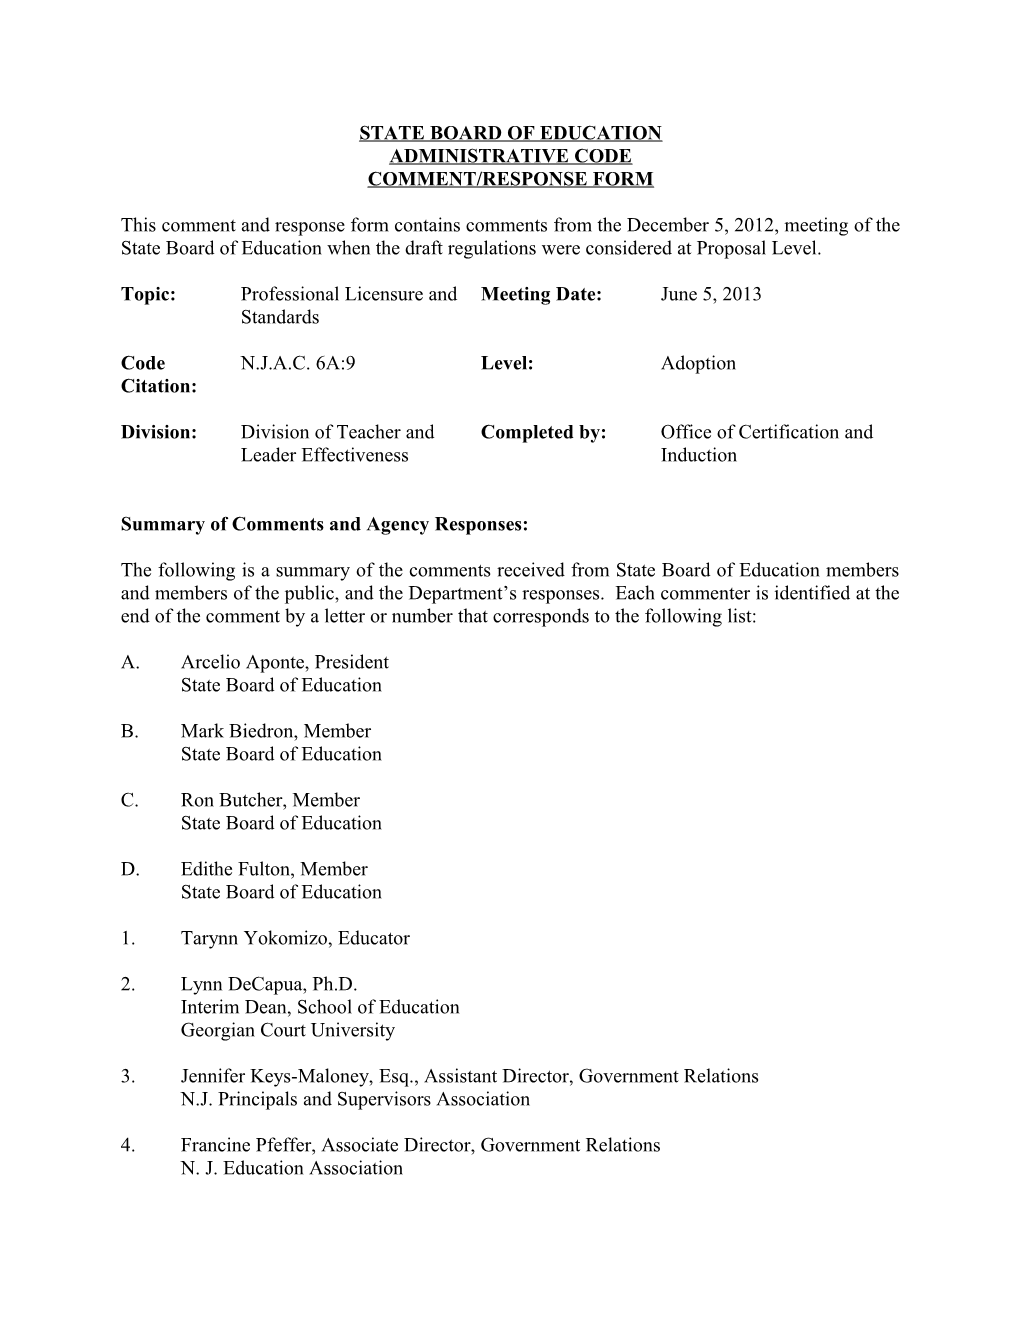 December 5, 2012 State Board Meeting